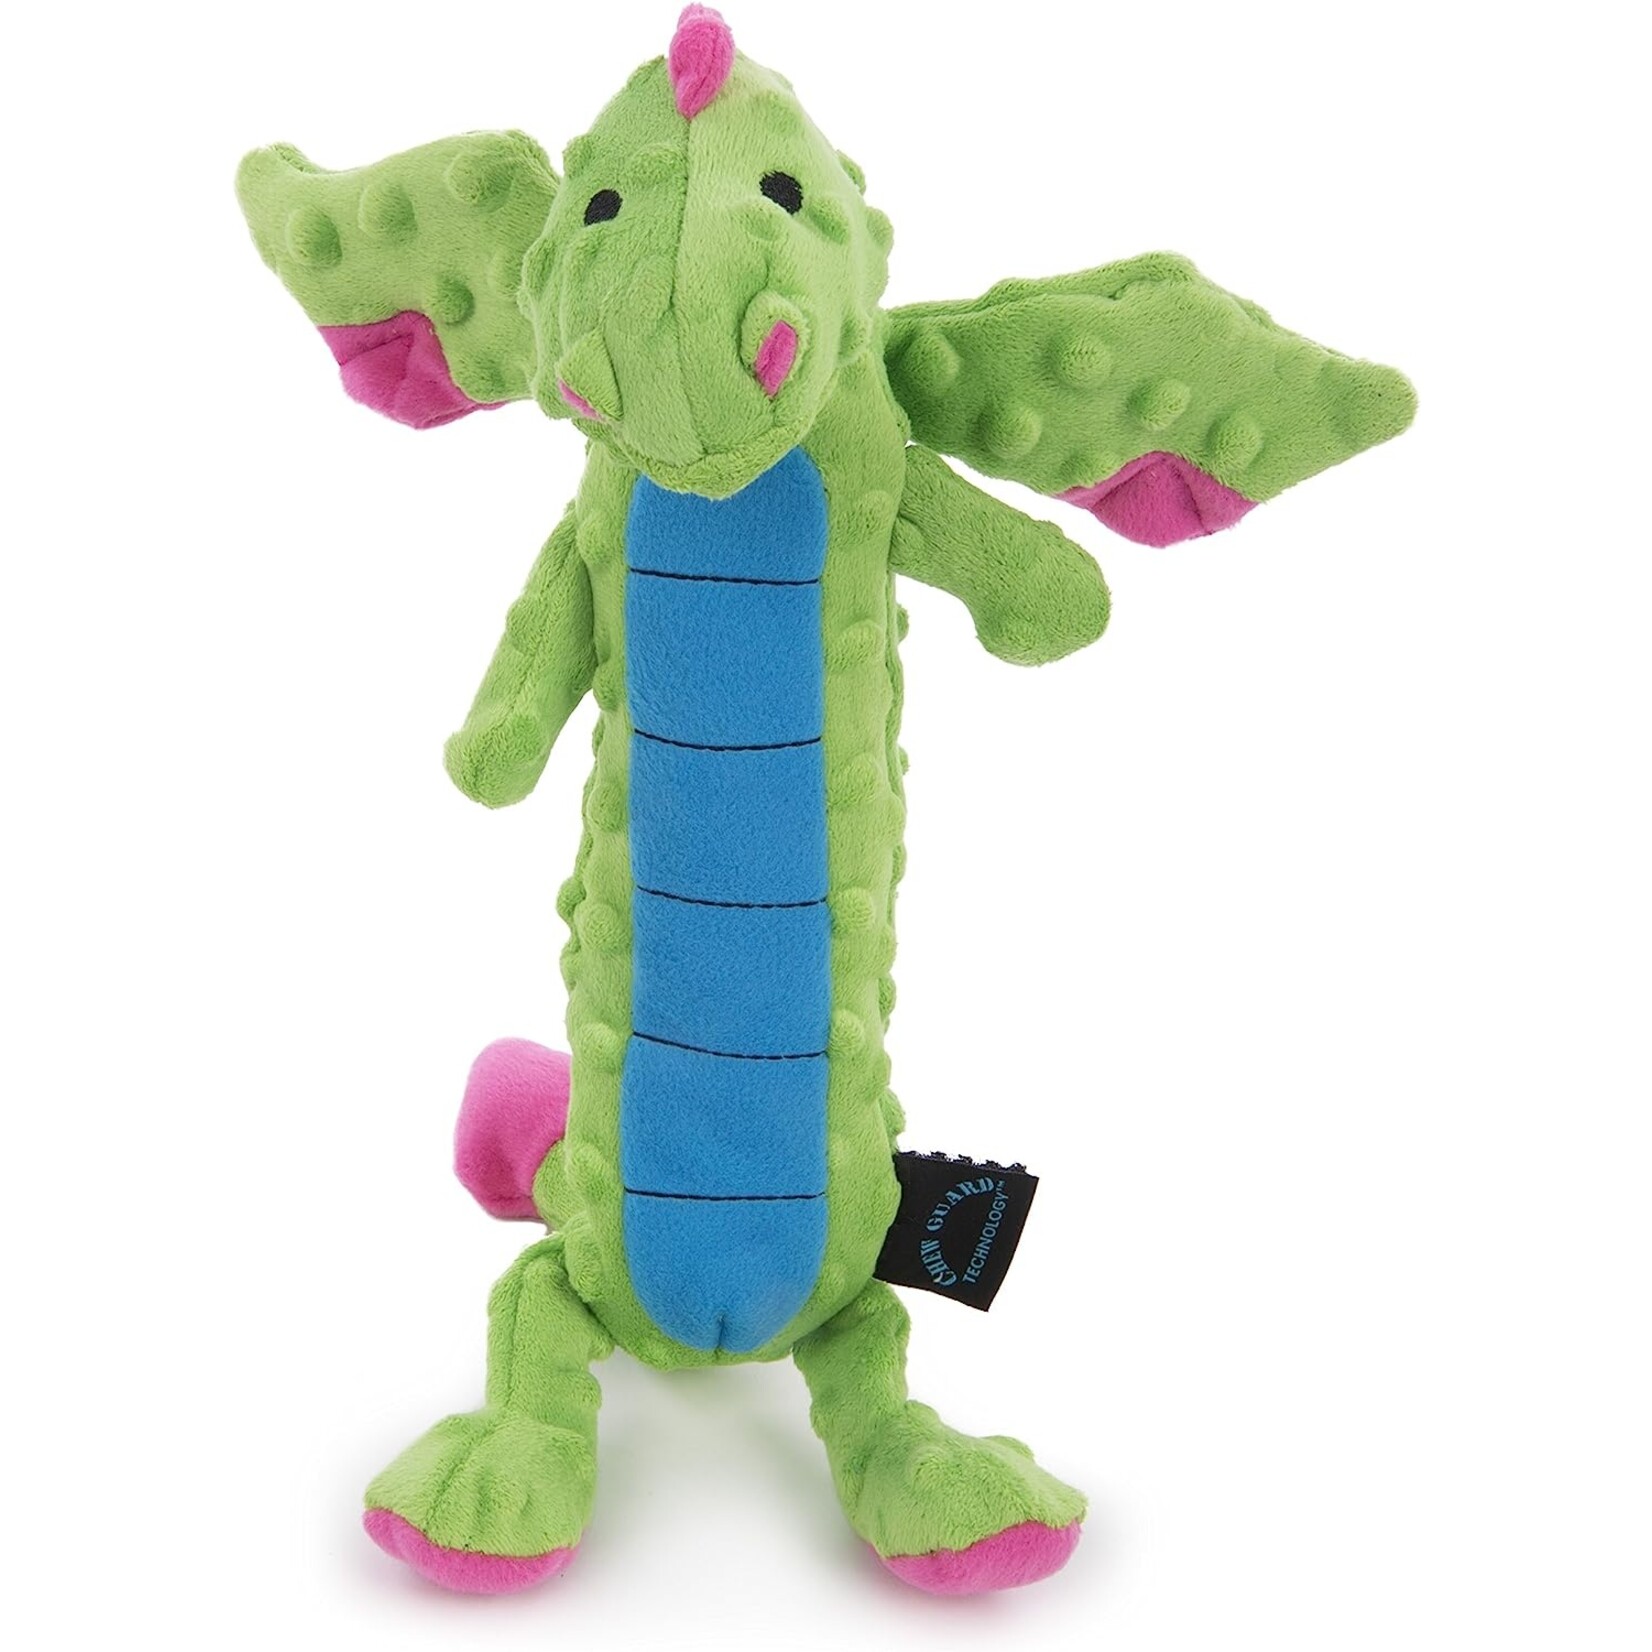 Worldwise/QPG/GoDog GODOG Dragon Skinny Green Toy Dog LG